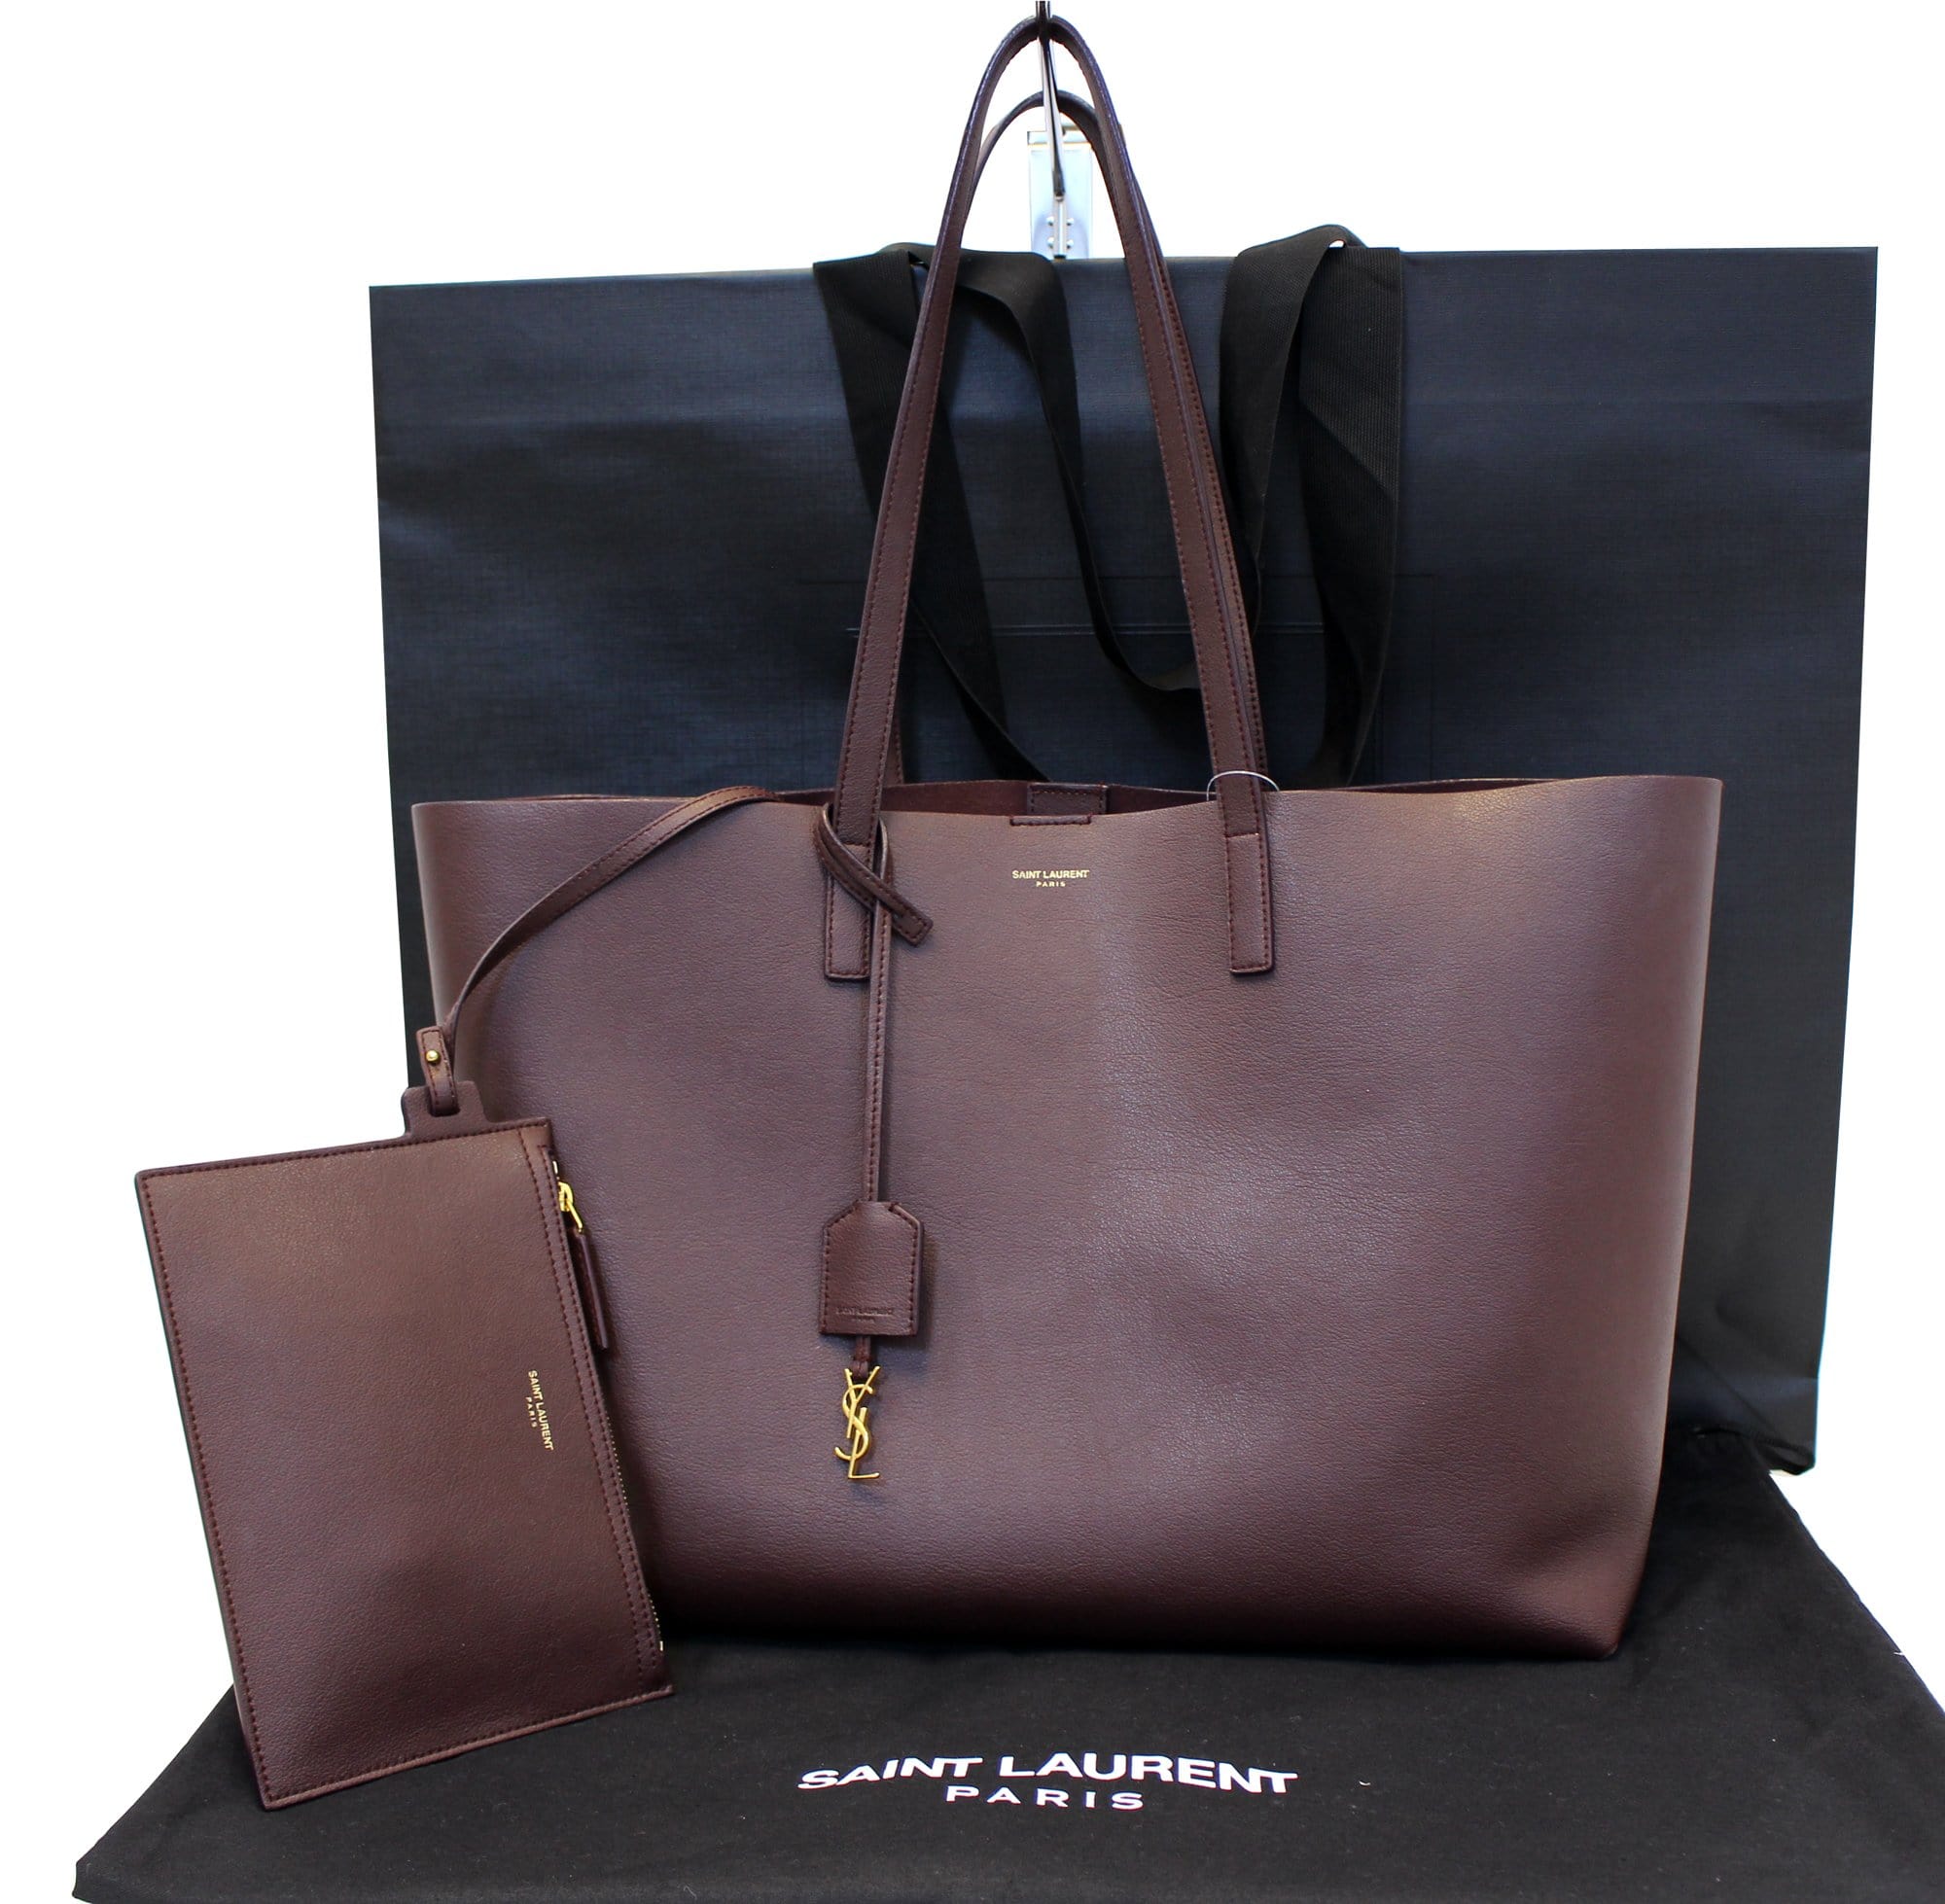 Yves Saint Laurent, Bags, Saint Laurent Shopping Tote